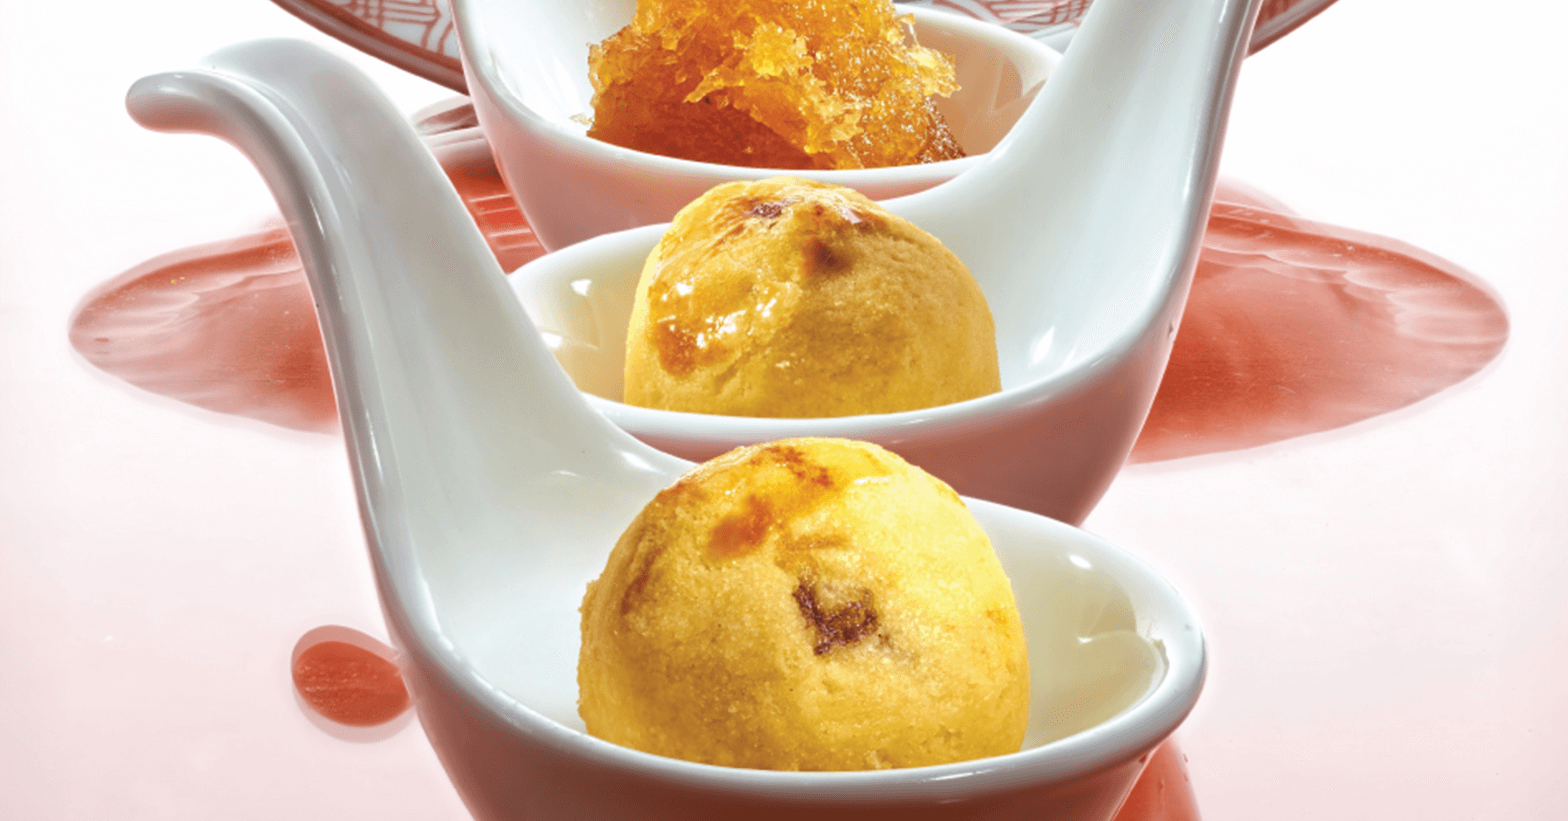 SG Halal Deals Mdm Ling Raya Cookies Premium Pineapple Balls